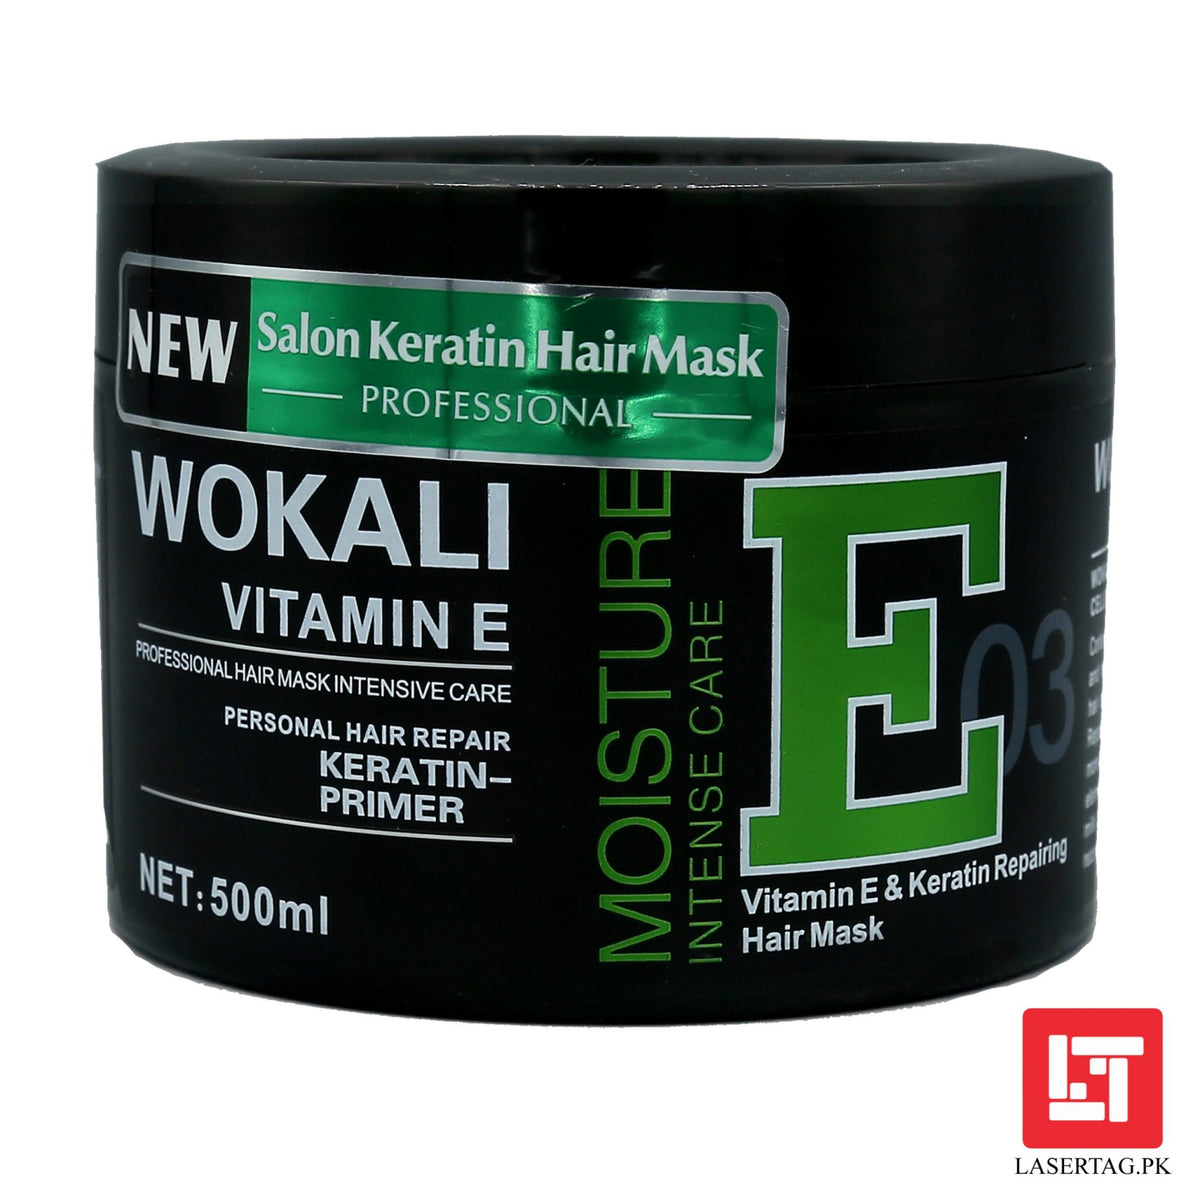 Wokali Hair Mask Vitamin E Moisture Intense Care Keratin Primer Green 500g freeshipping - lasertag.pk